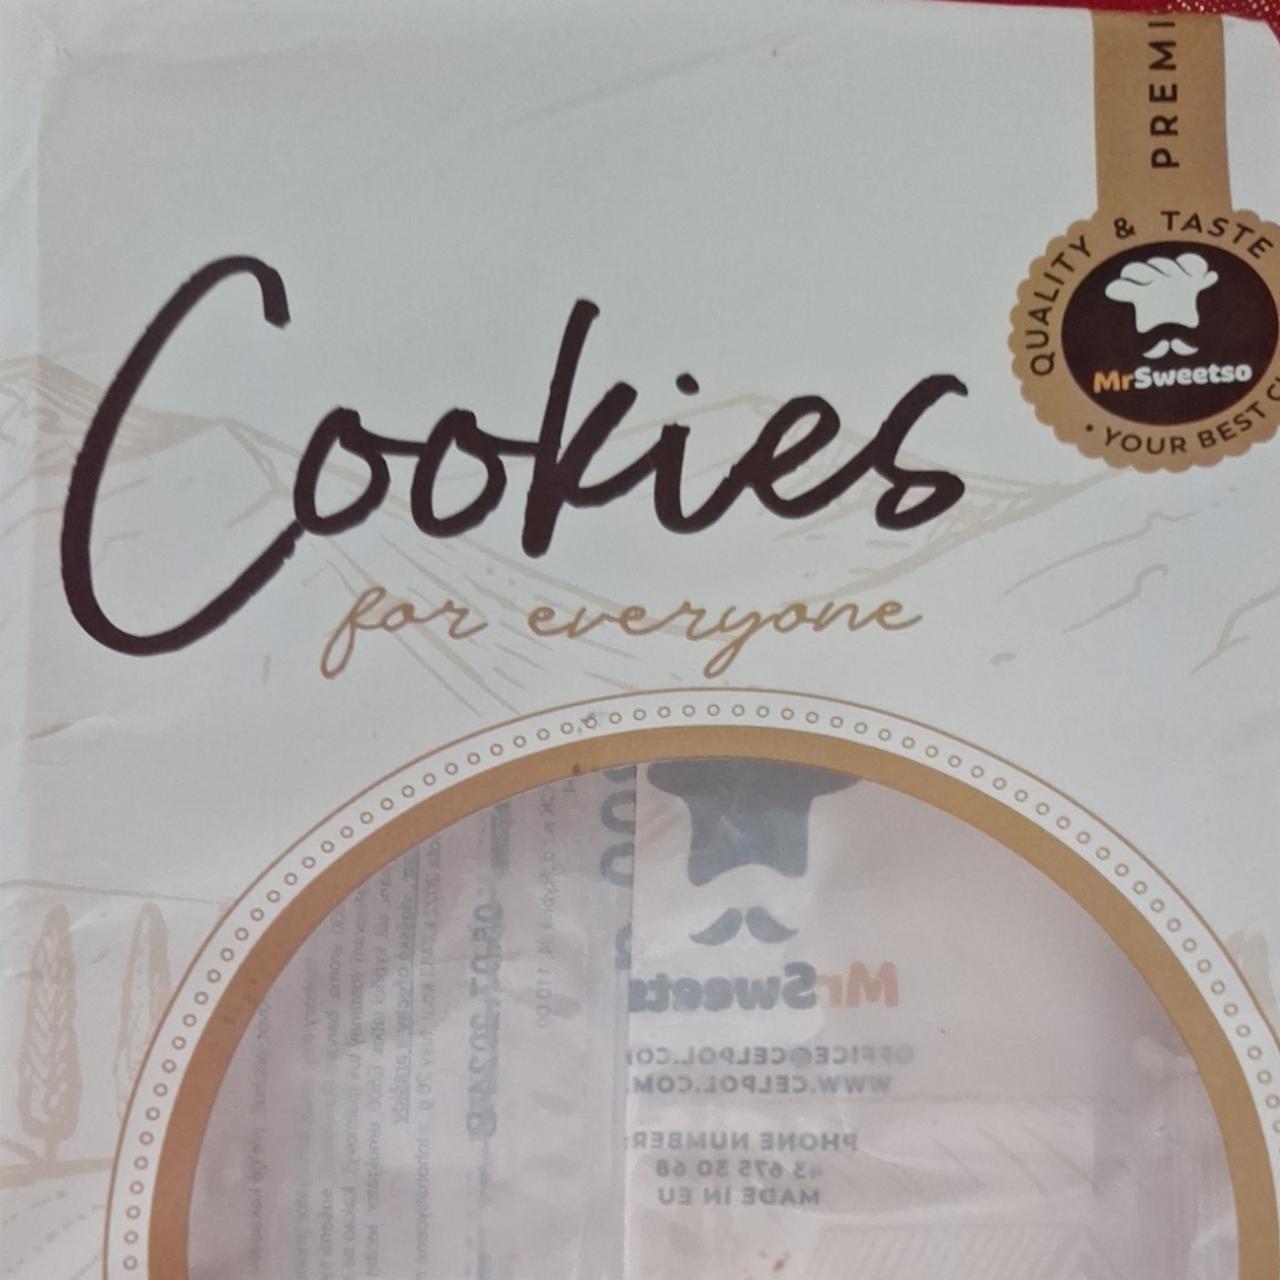 Fotografie - Cookies for everyone MrSweetso